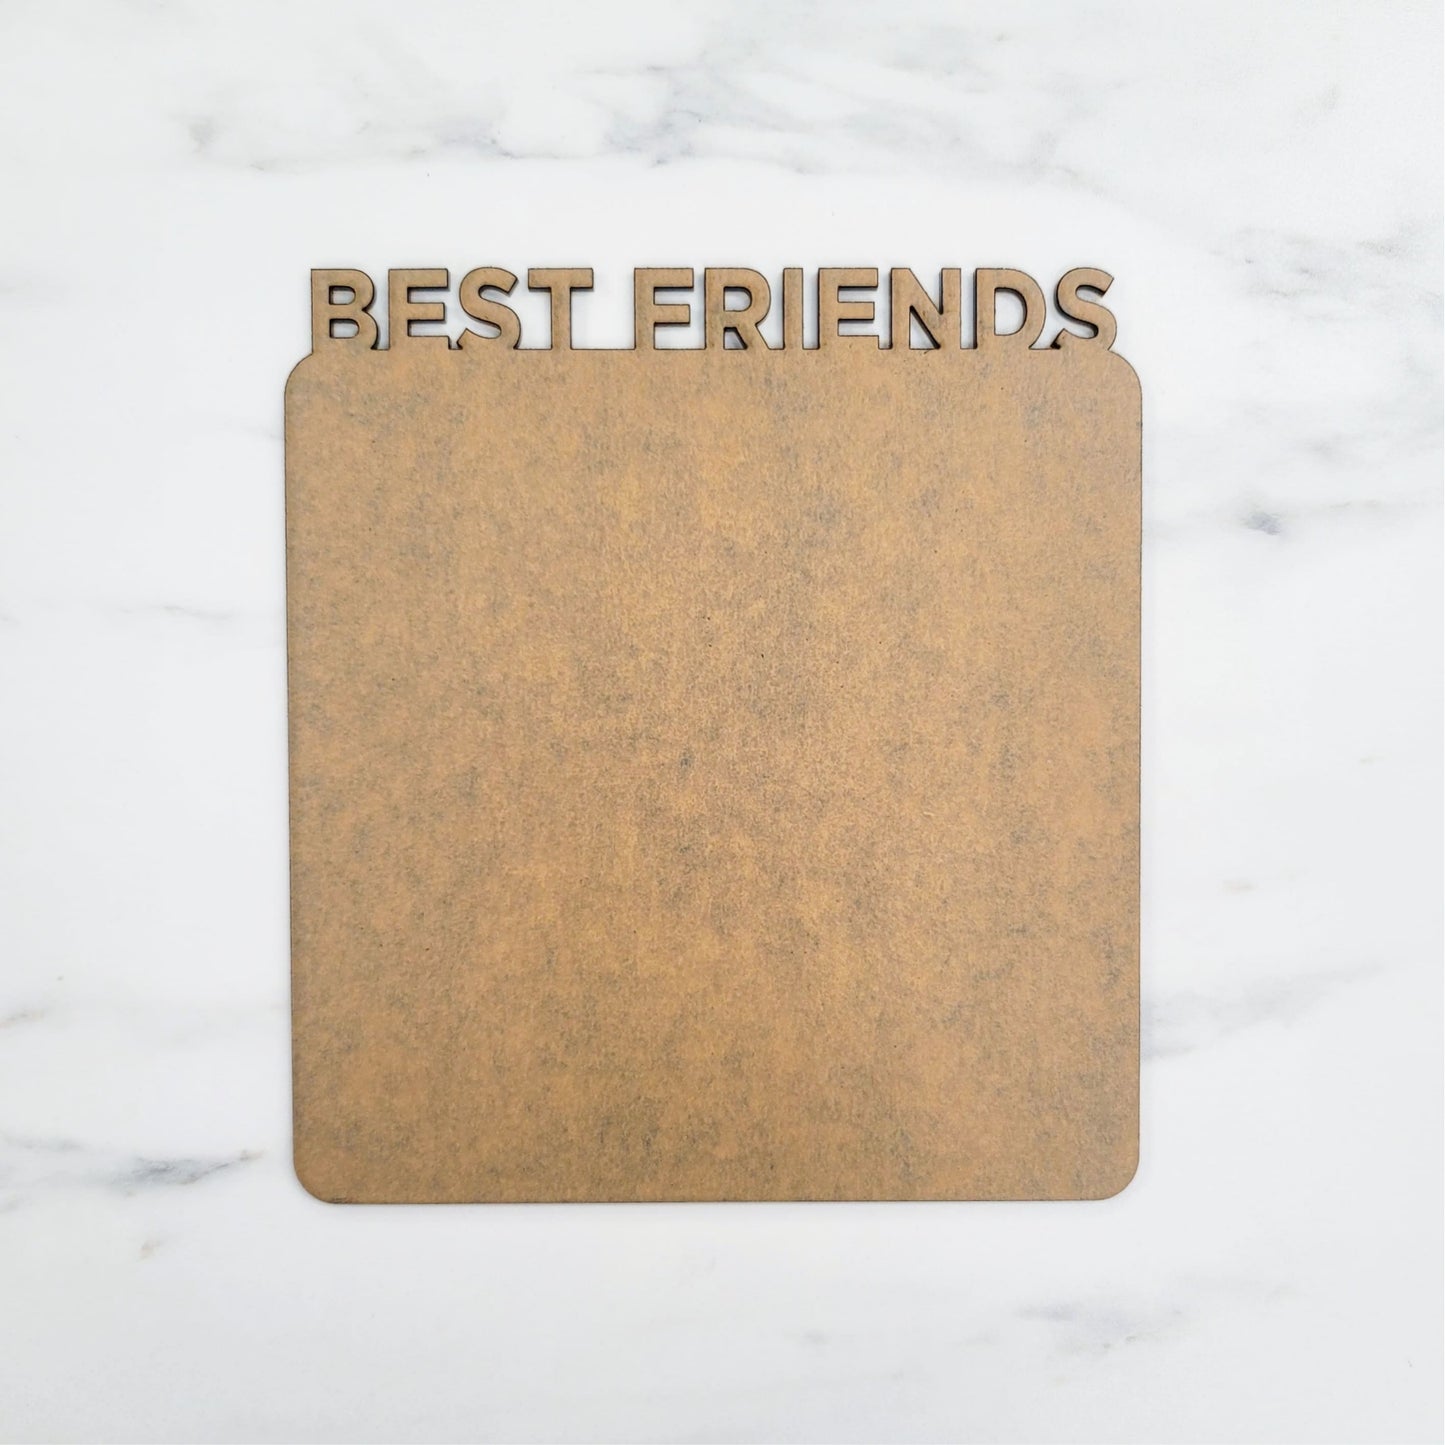 BEST FRIENDS | Plaque